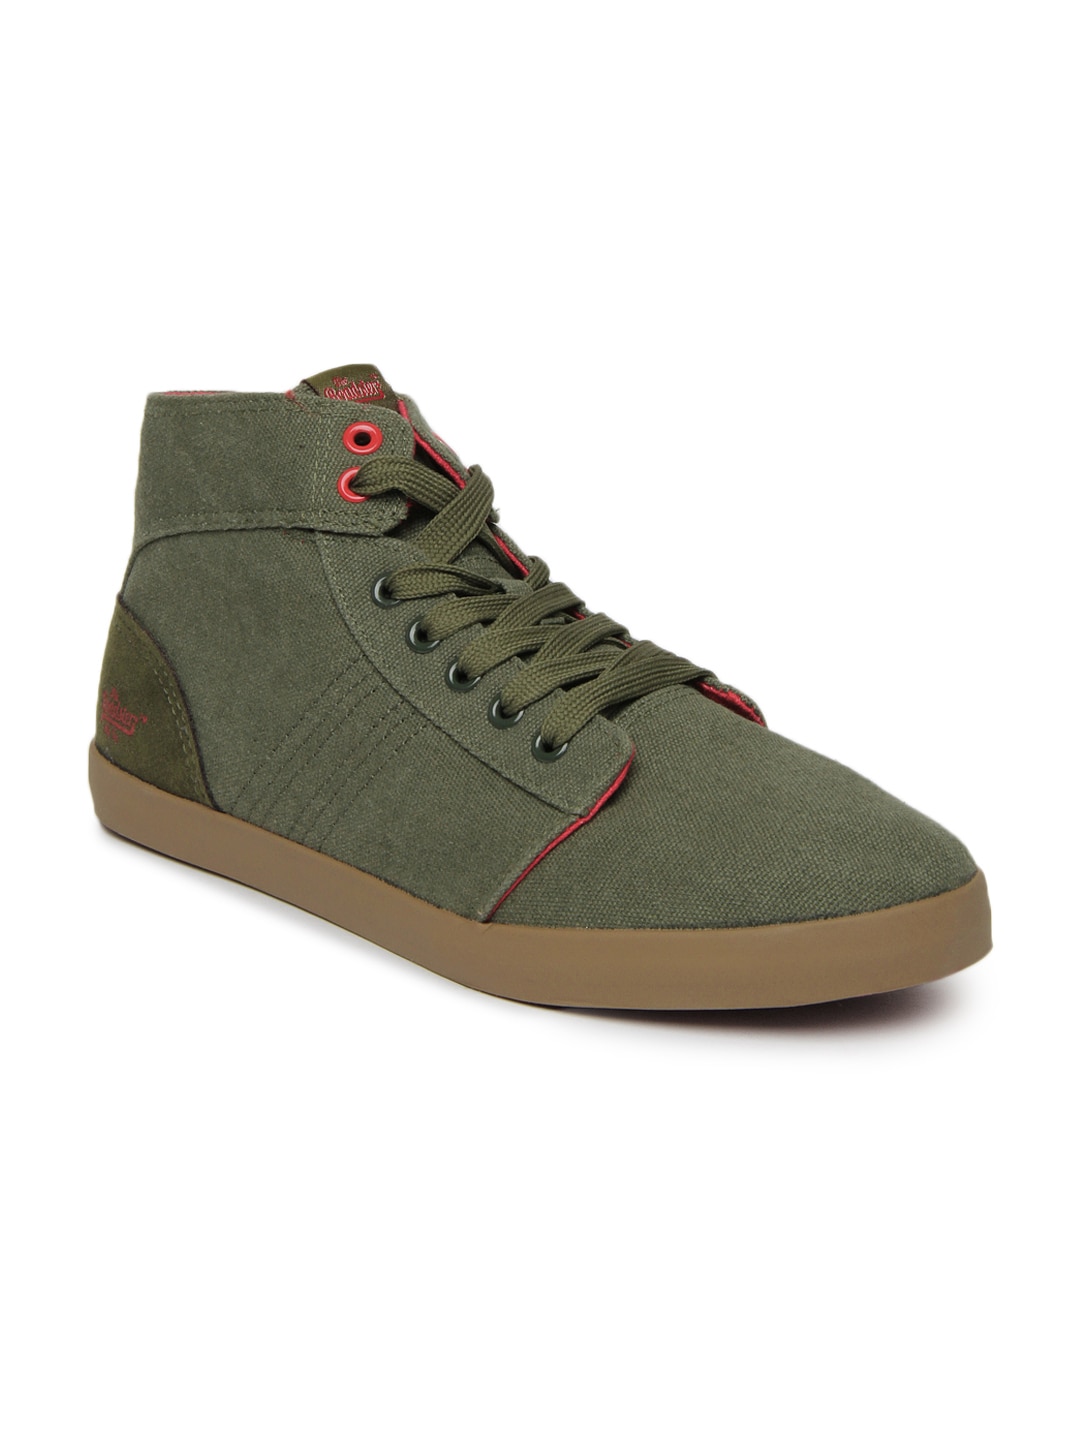 Buy Roadster Men Olive Green Casual Shoes 632 Footwear